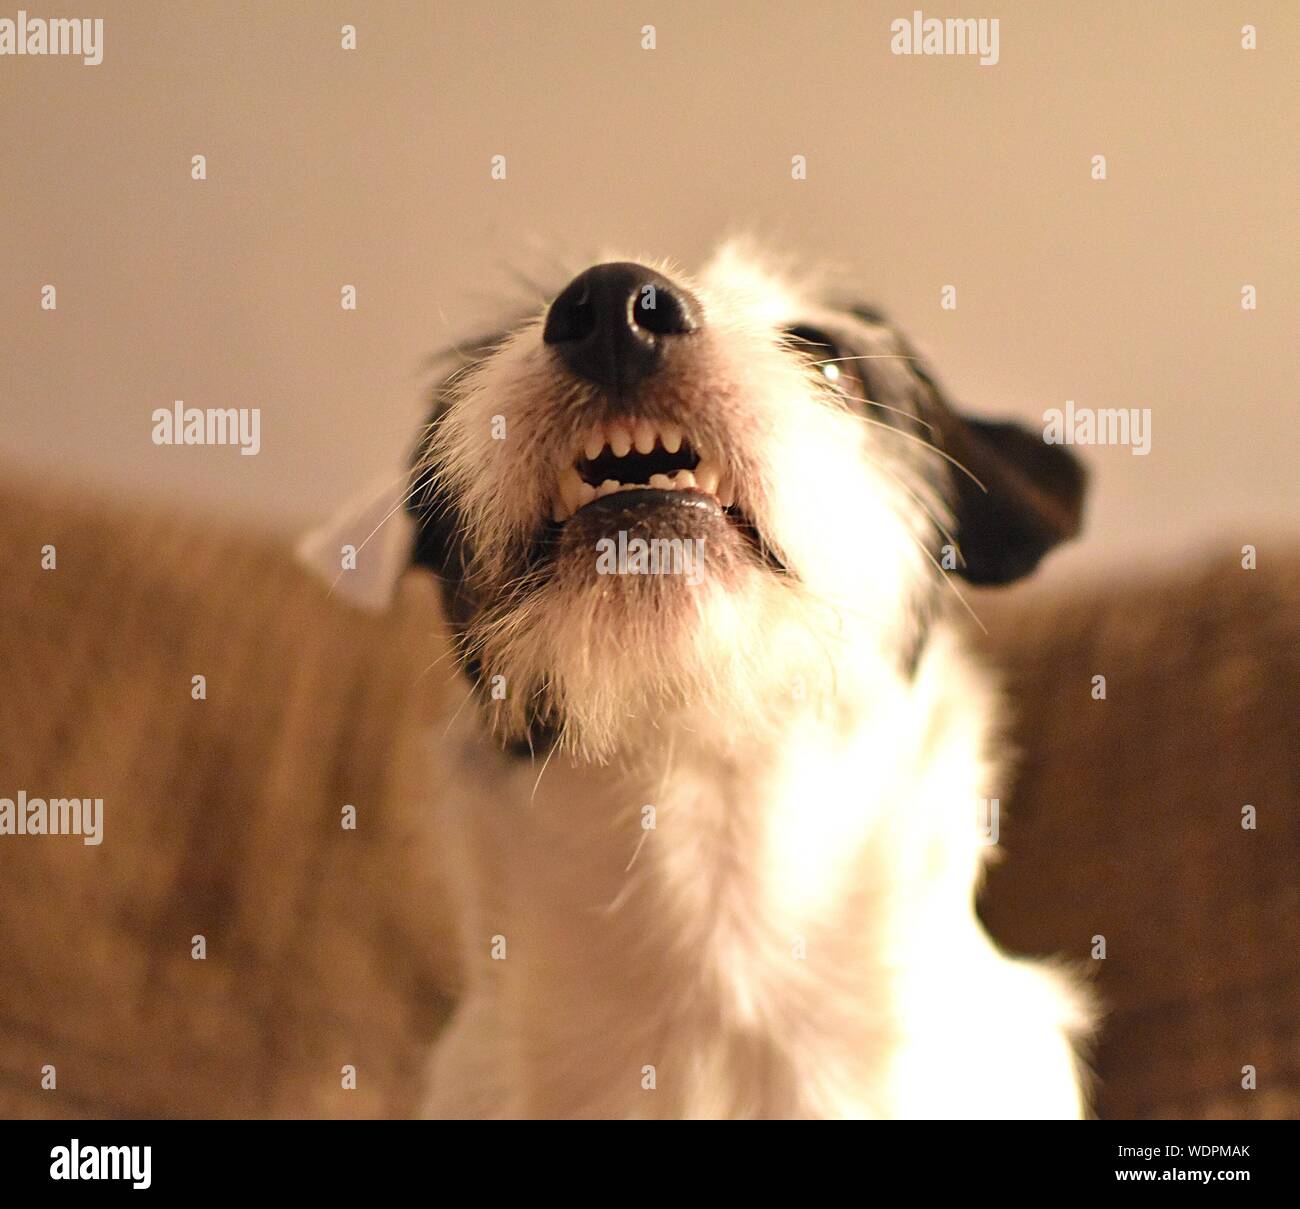 Close-up de enojado perro en casa Foto de stock